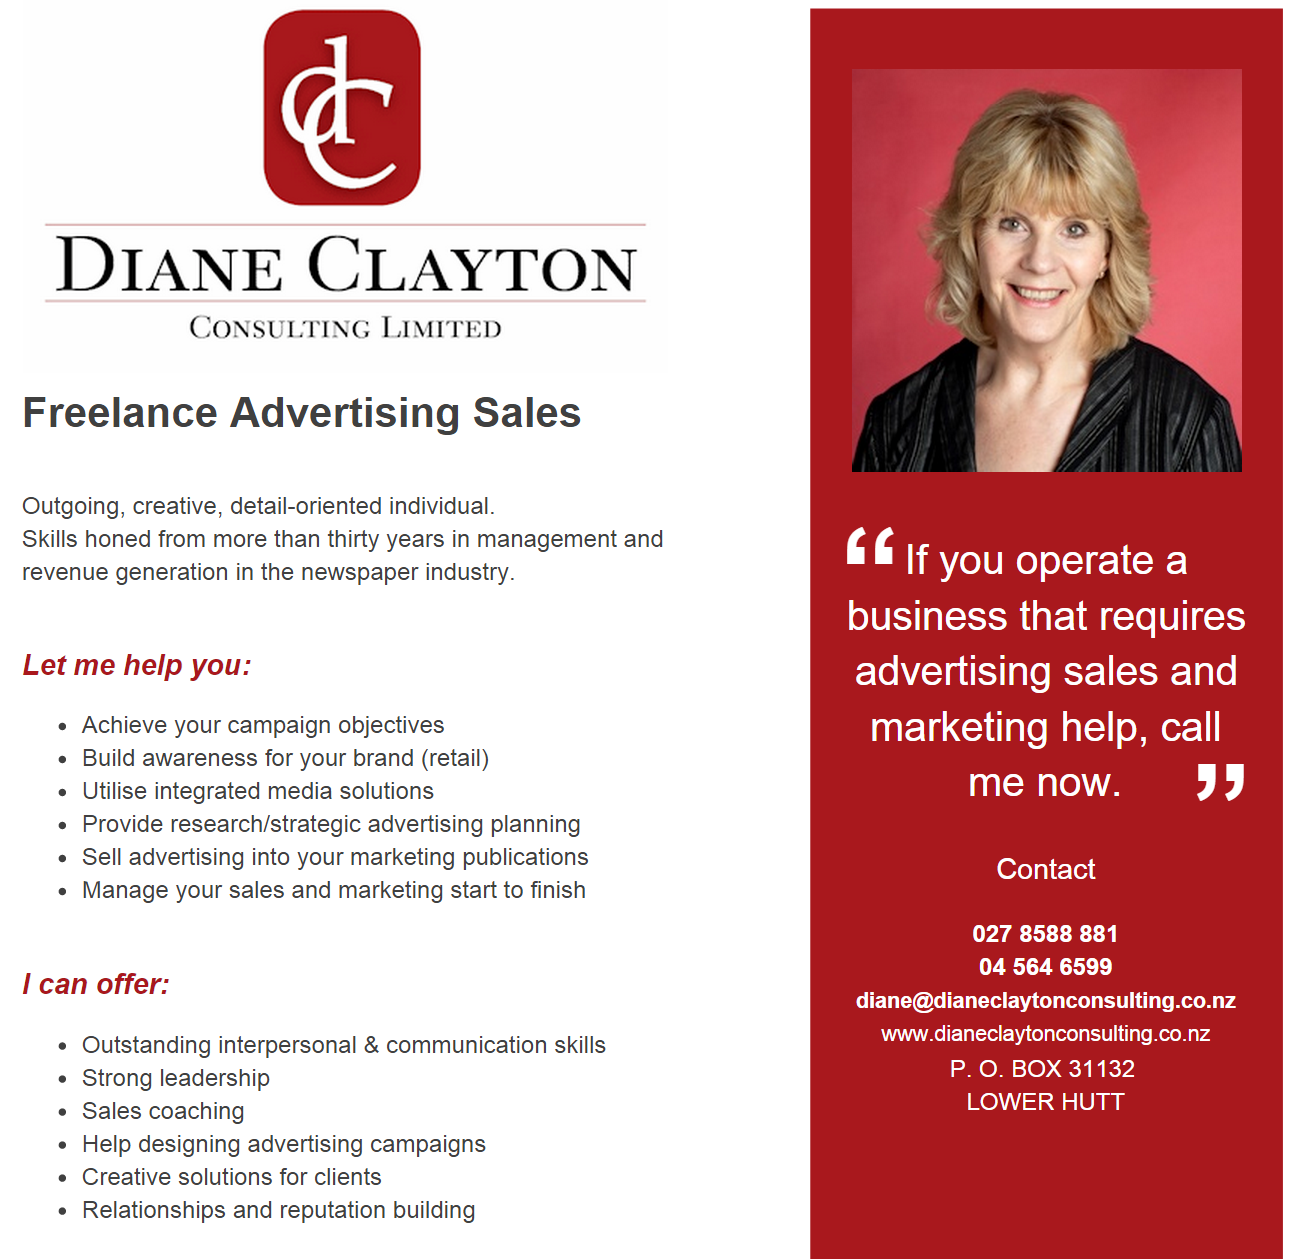 Diane Clayton Consulting